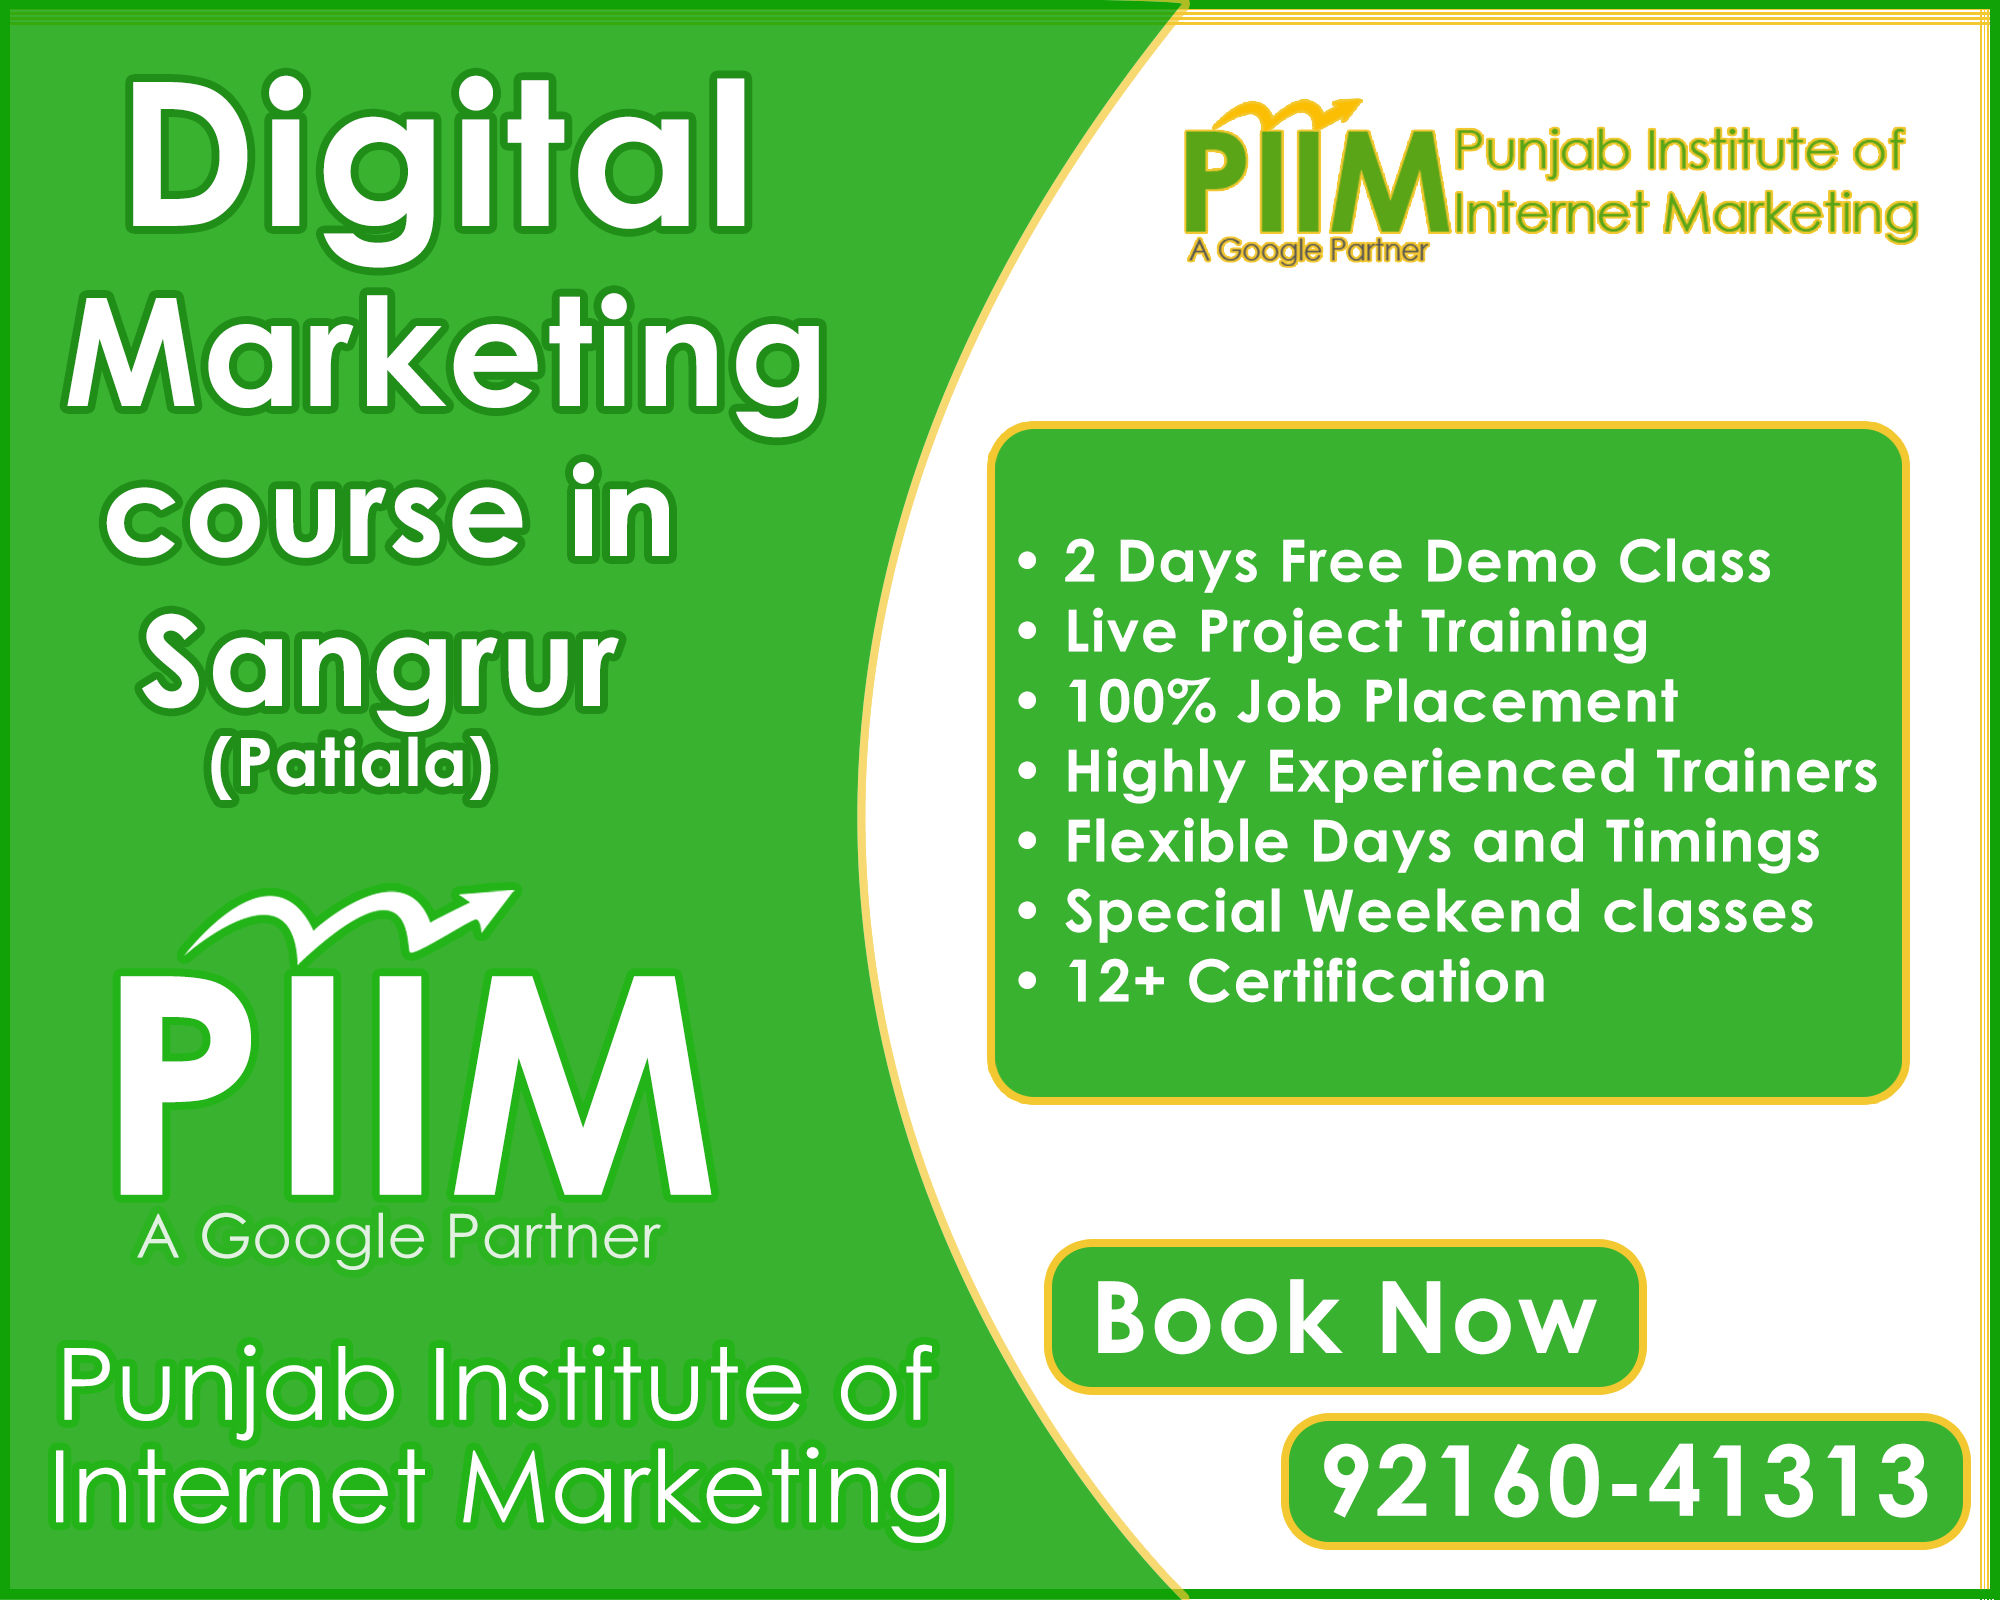 Digital Marketing Course in Sangrur